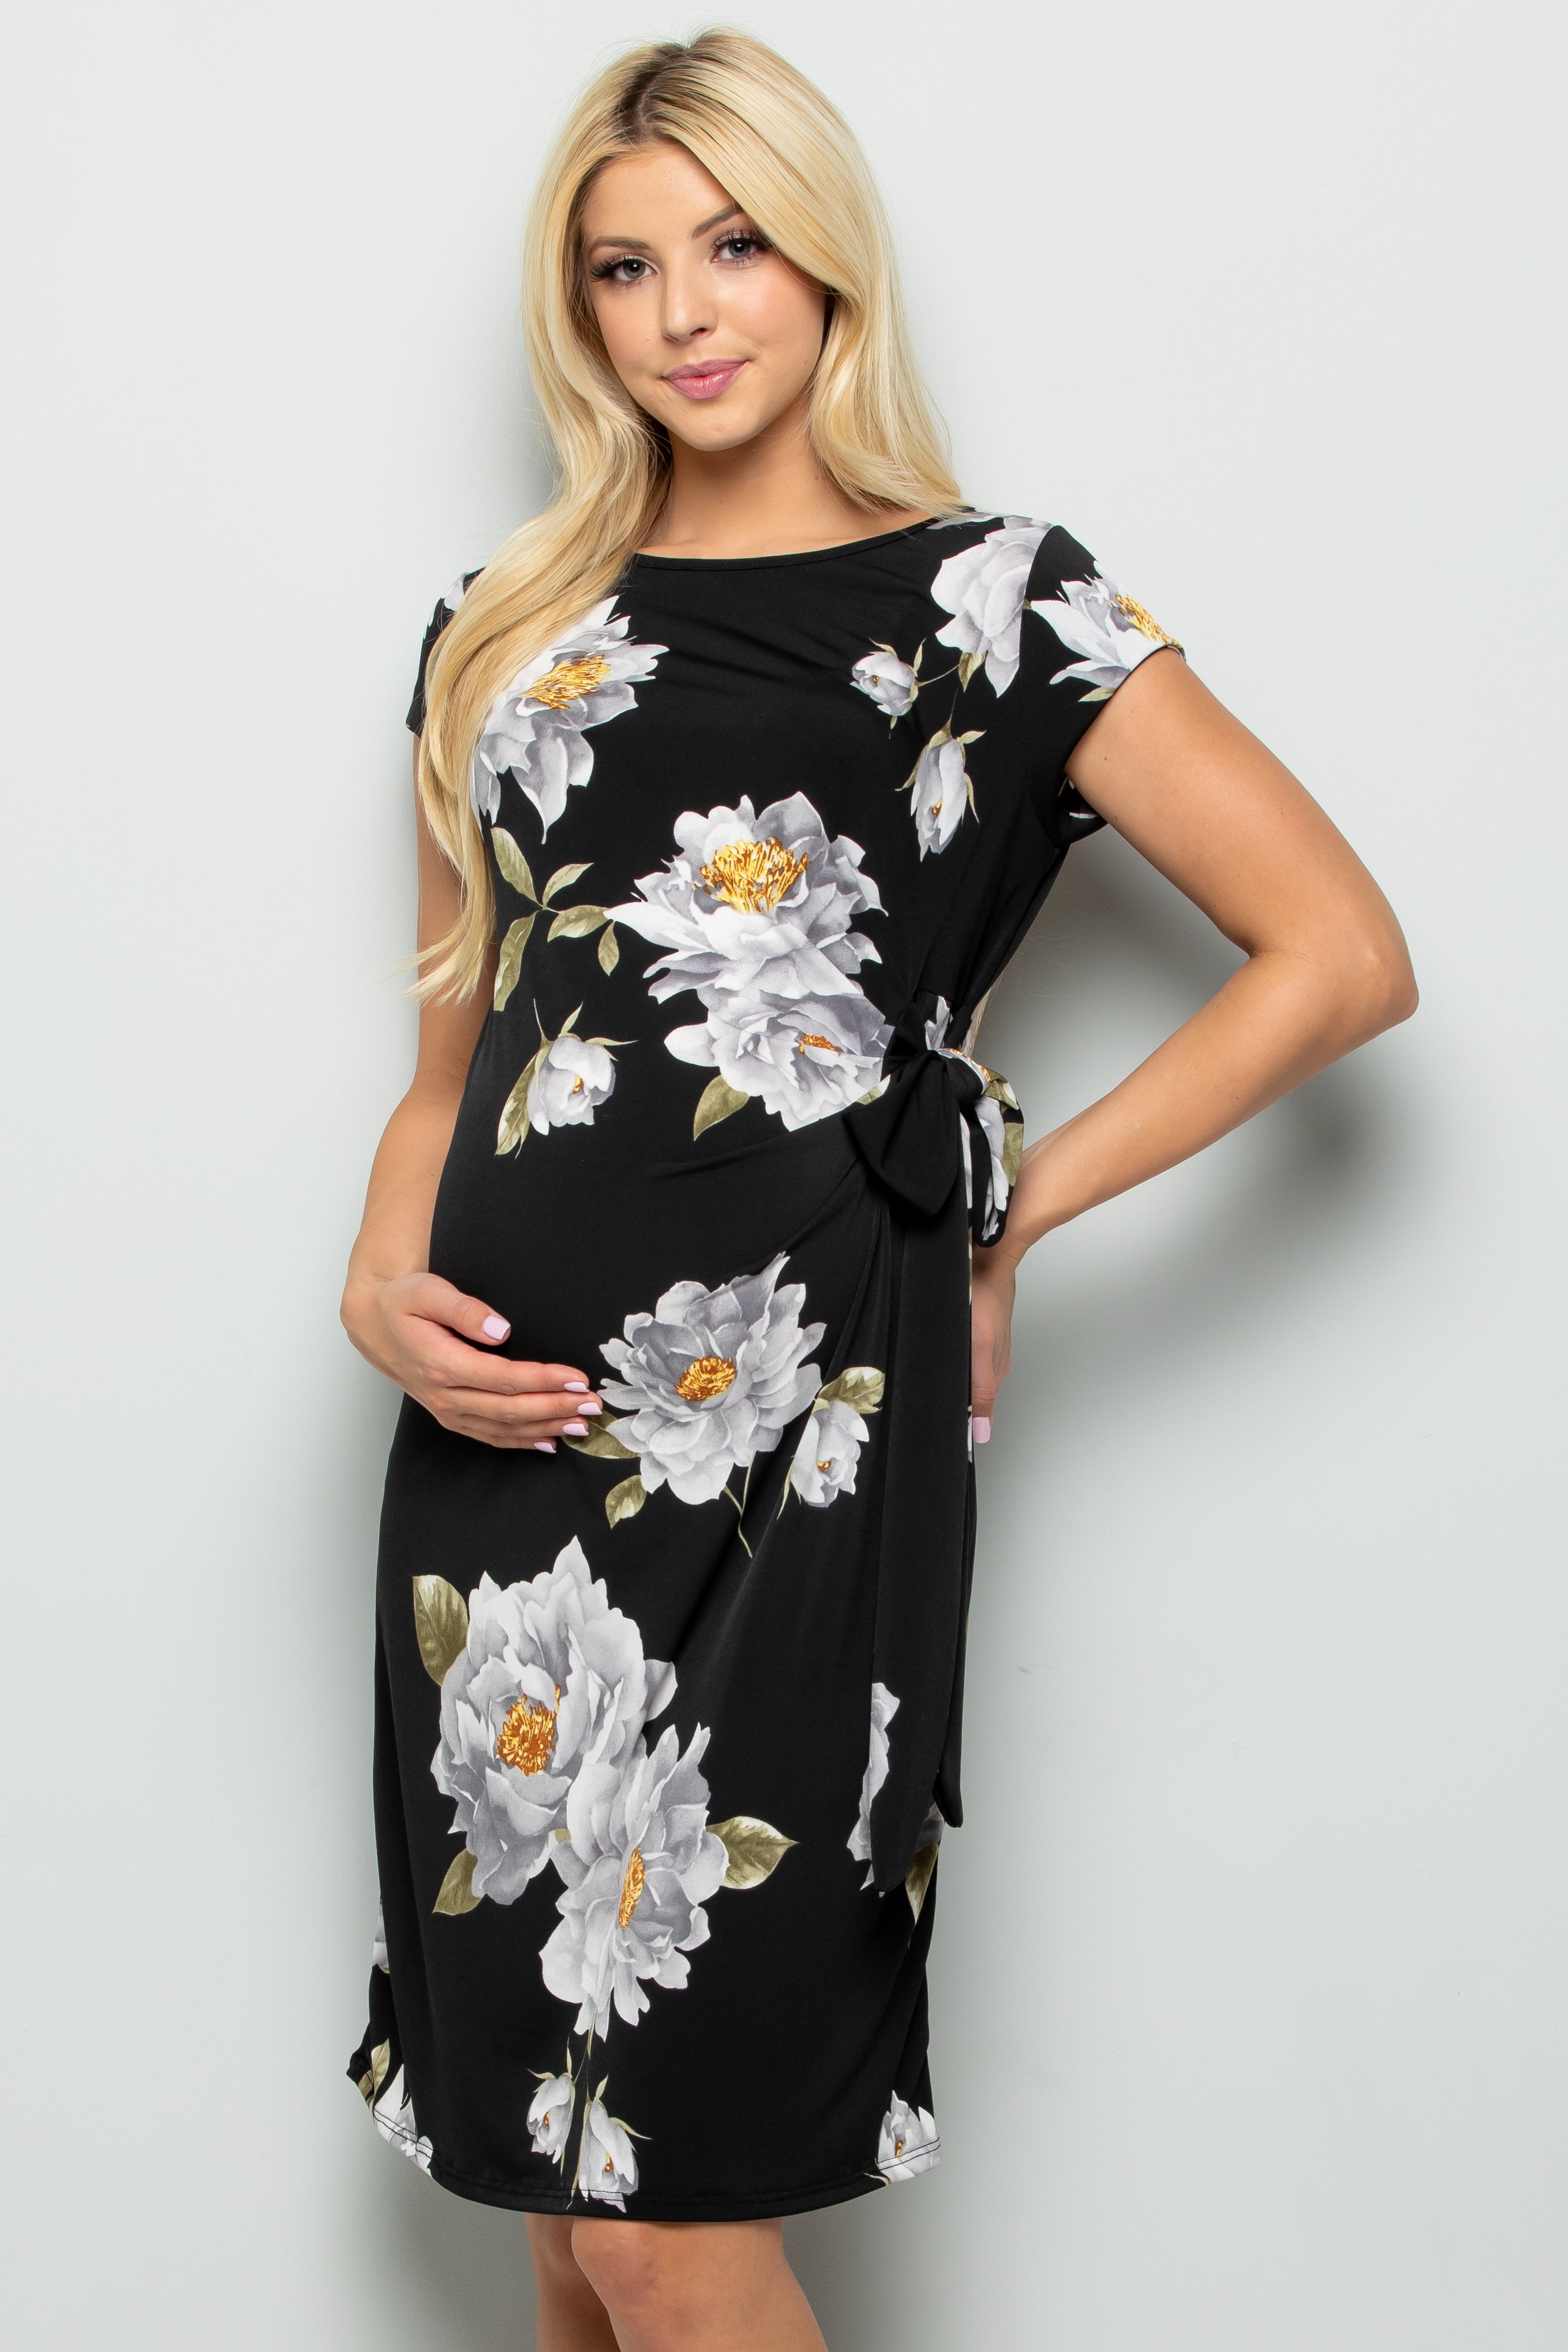 Pregnancy Cocktail Dress